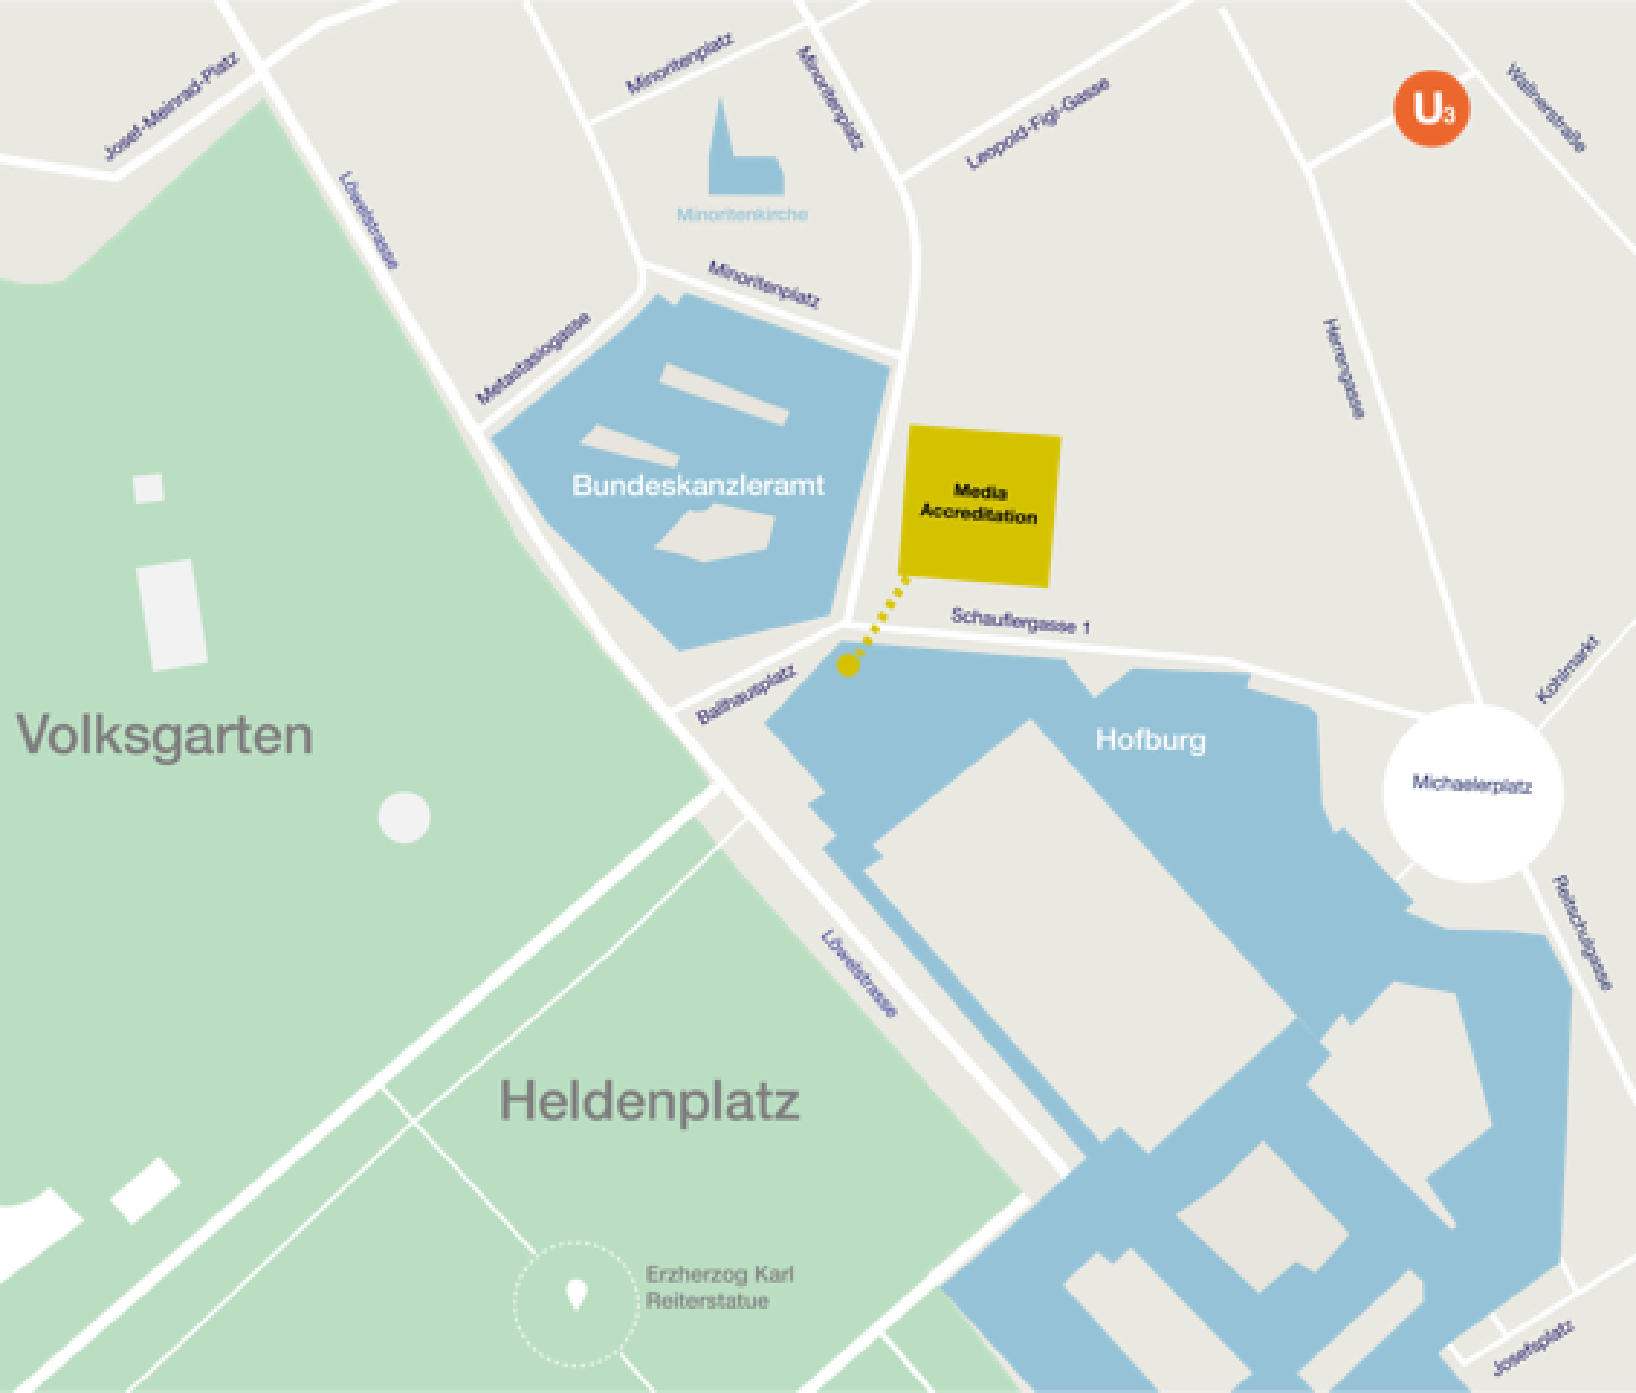 Access map to media accrediation, Schauflergasse